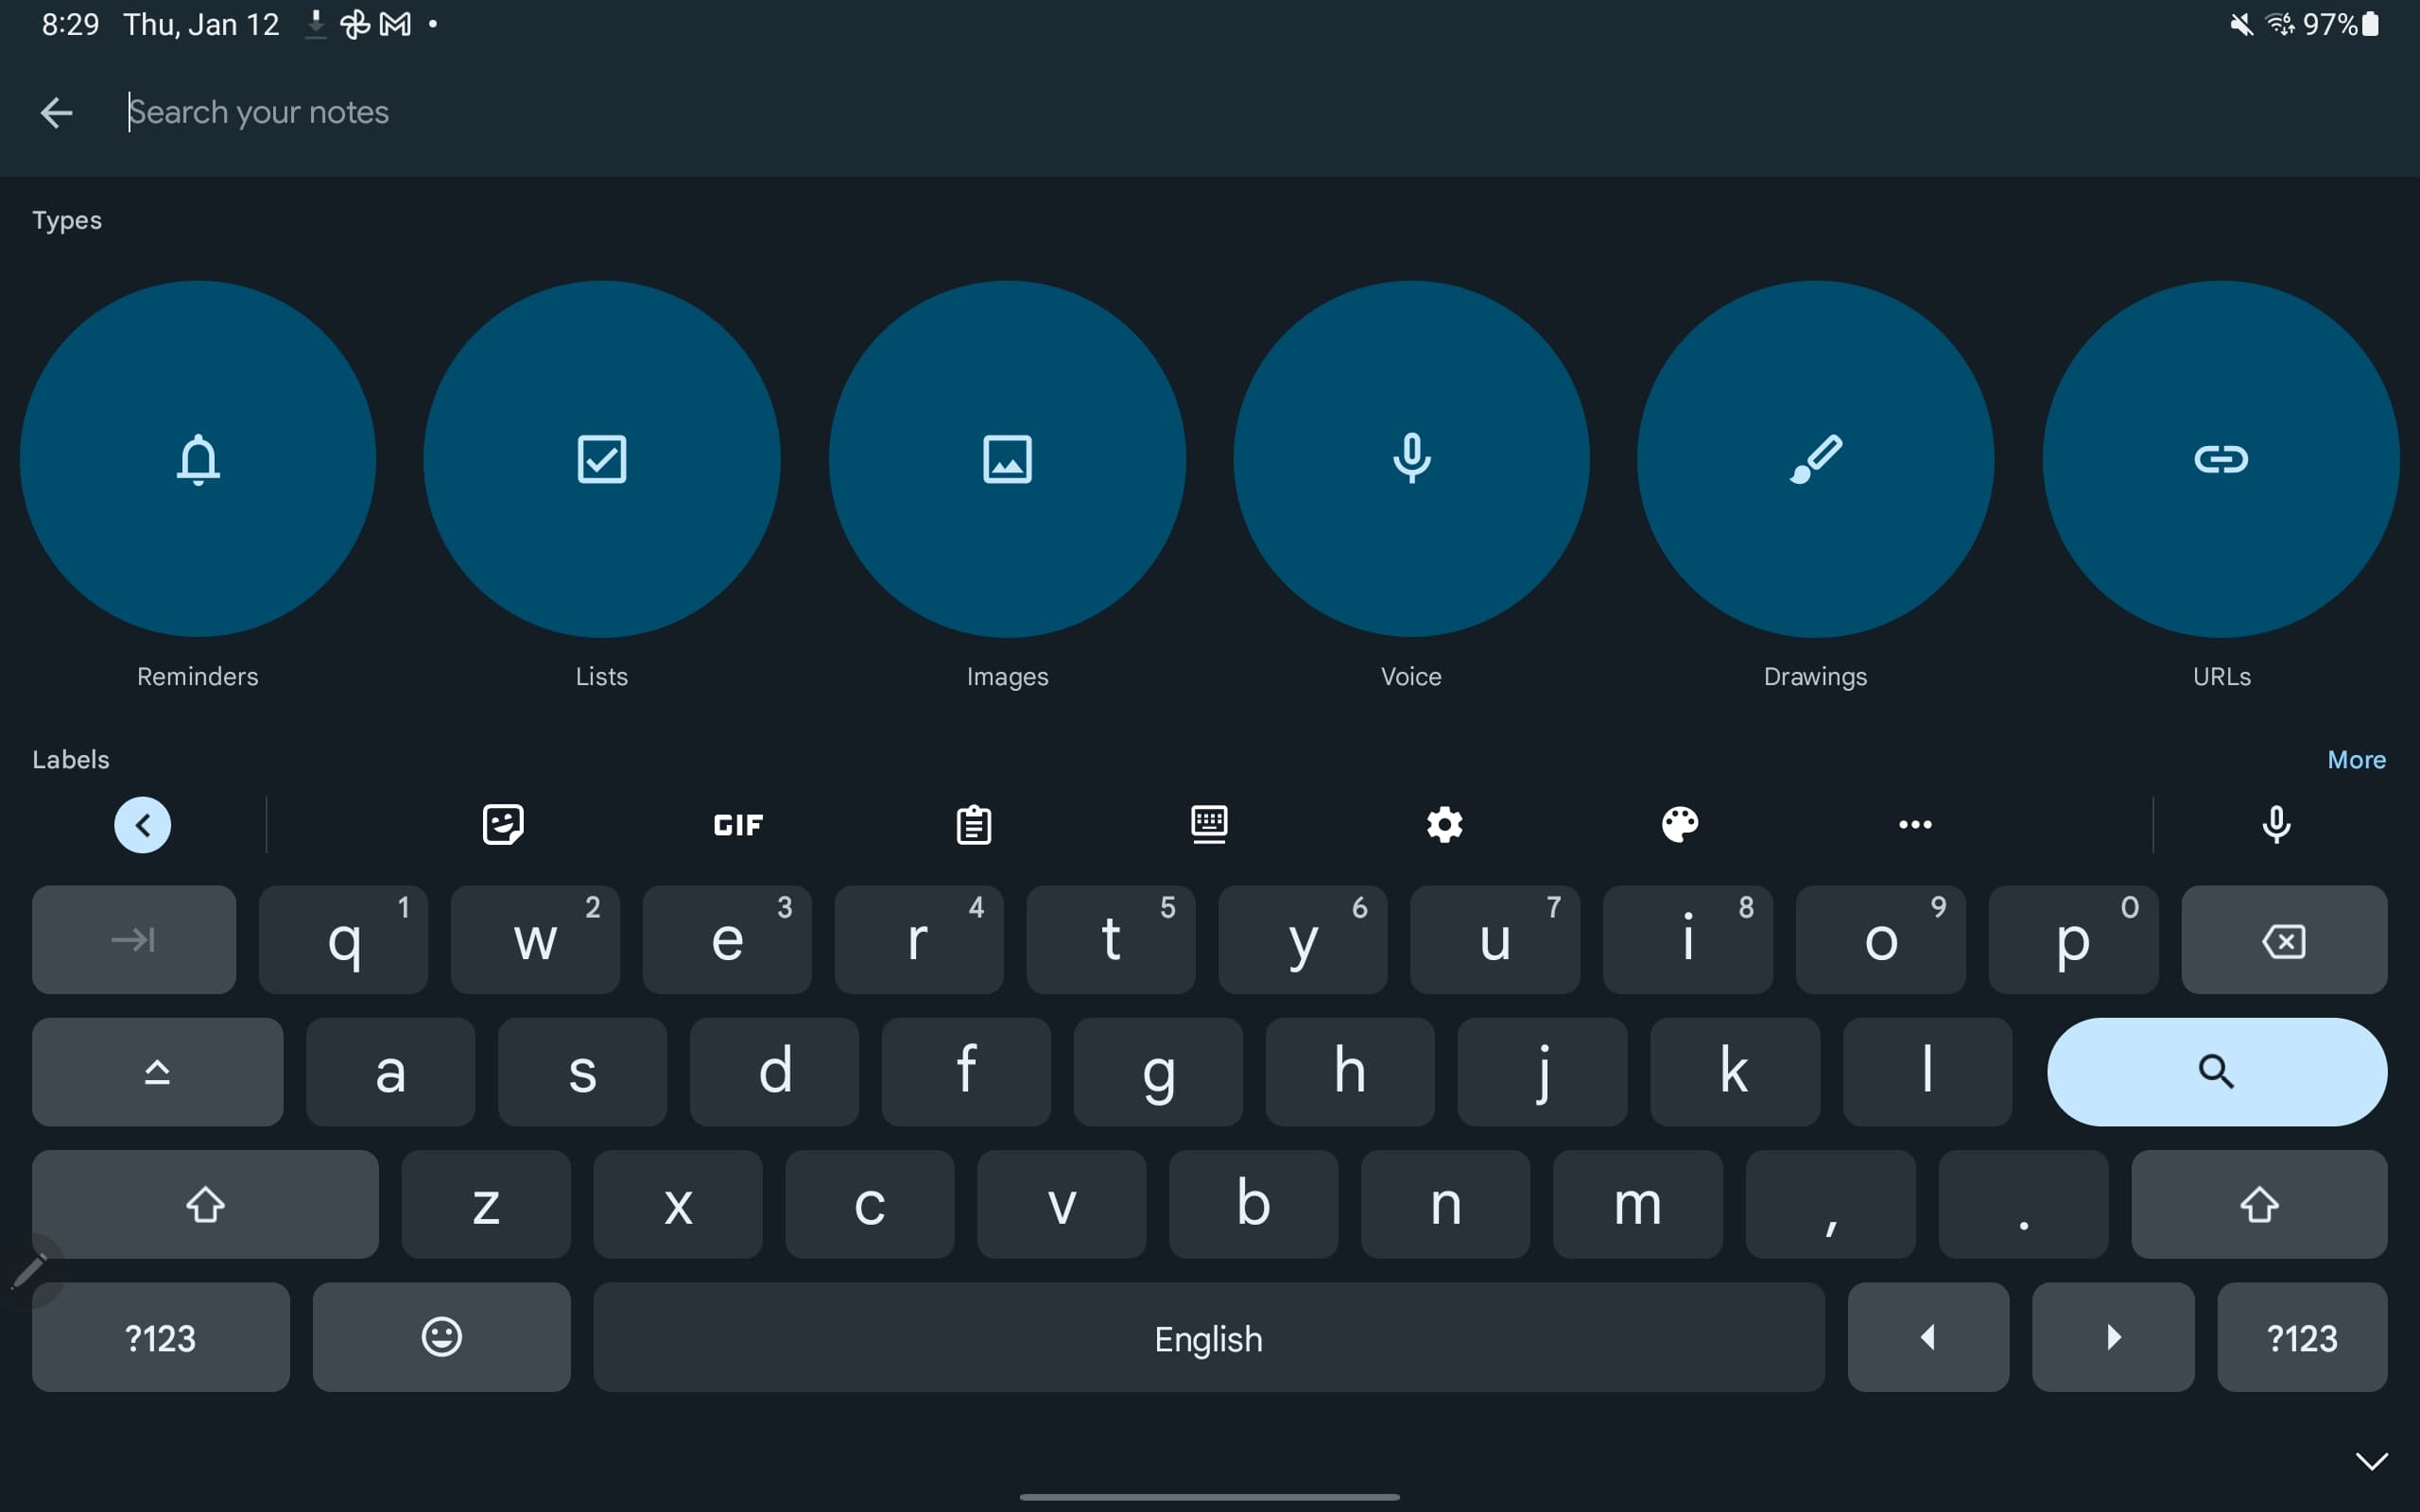 Gboard toolbar redesign work continues as tablet layout tweaked [Gallery]